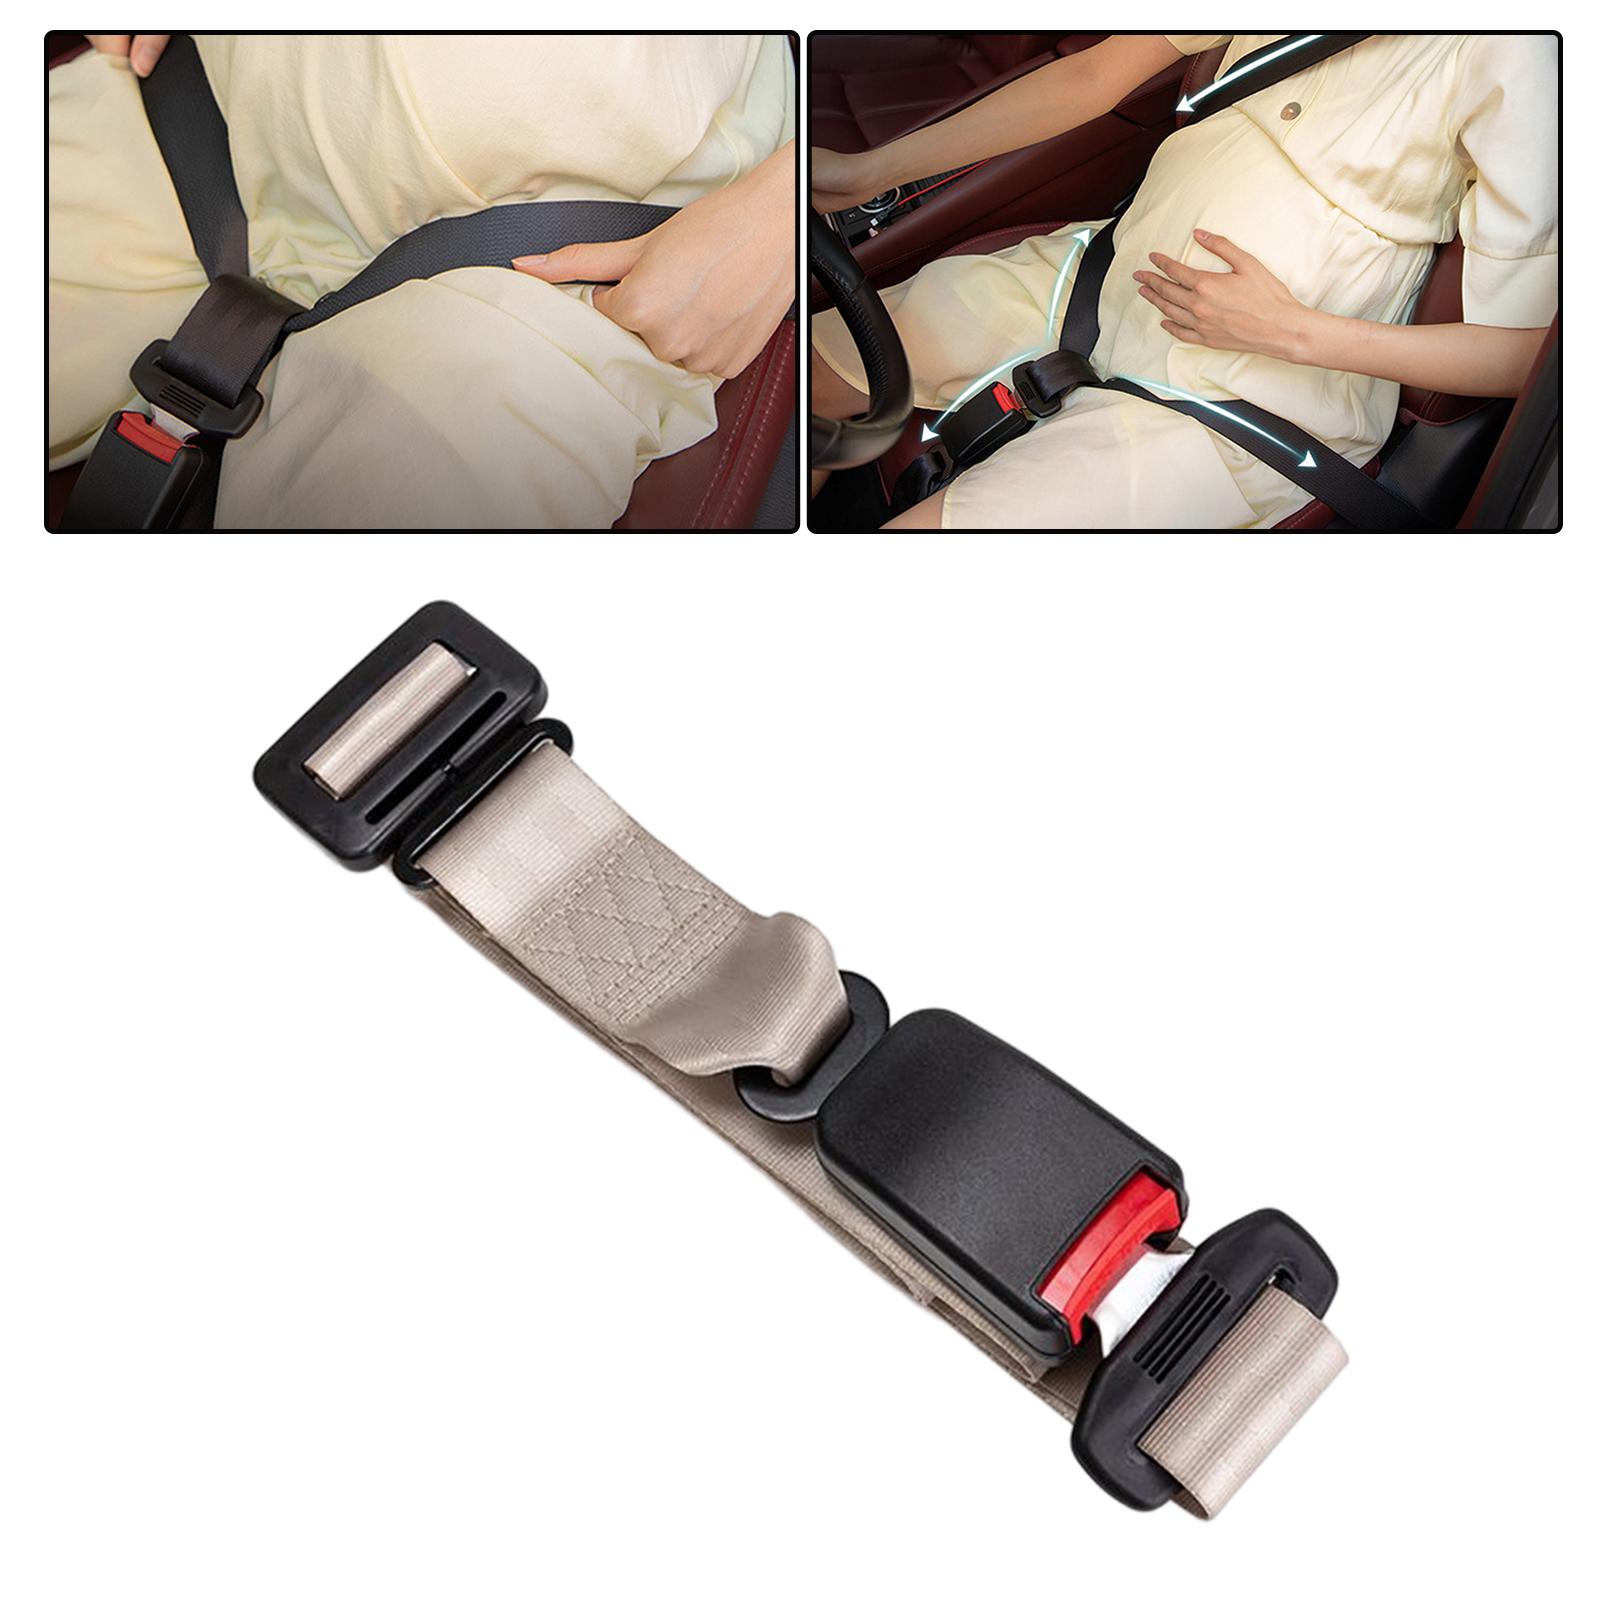 Pregnancy Car Seat Safety belt Protector for Pregnancy Woman Khaki